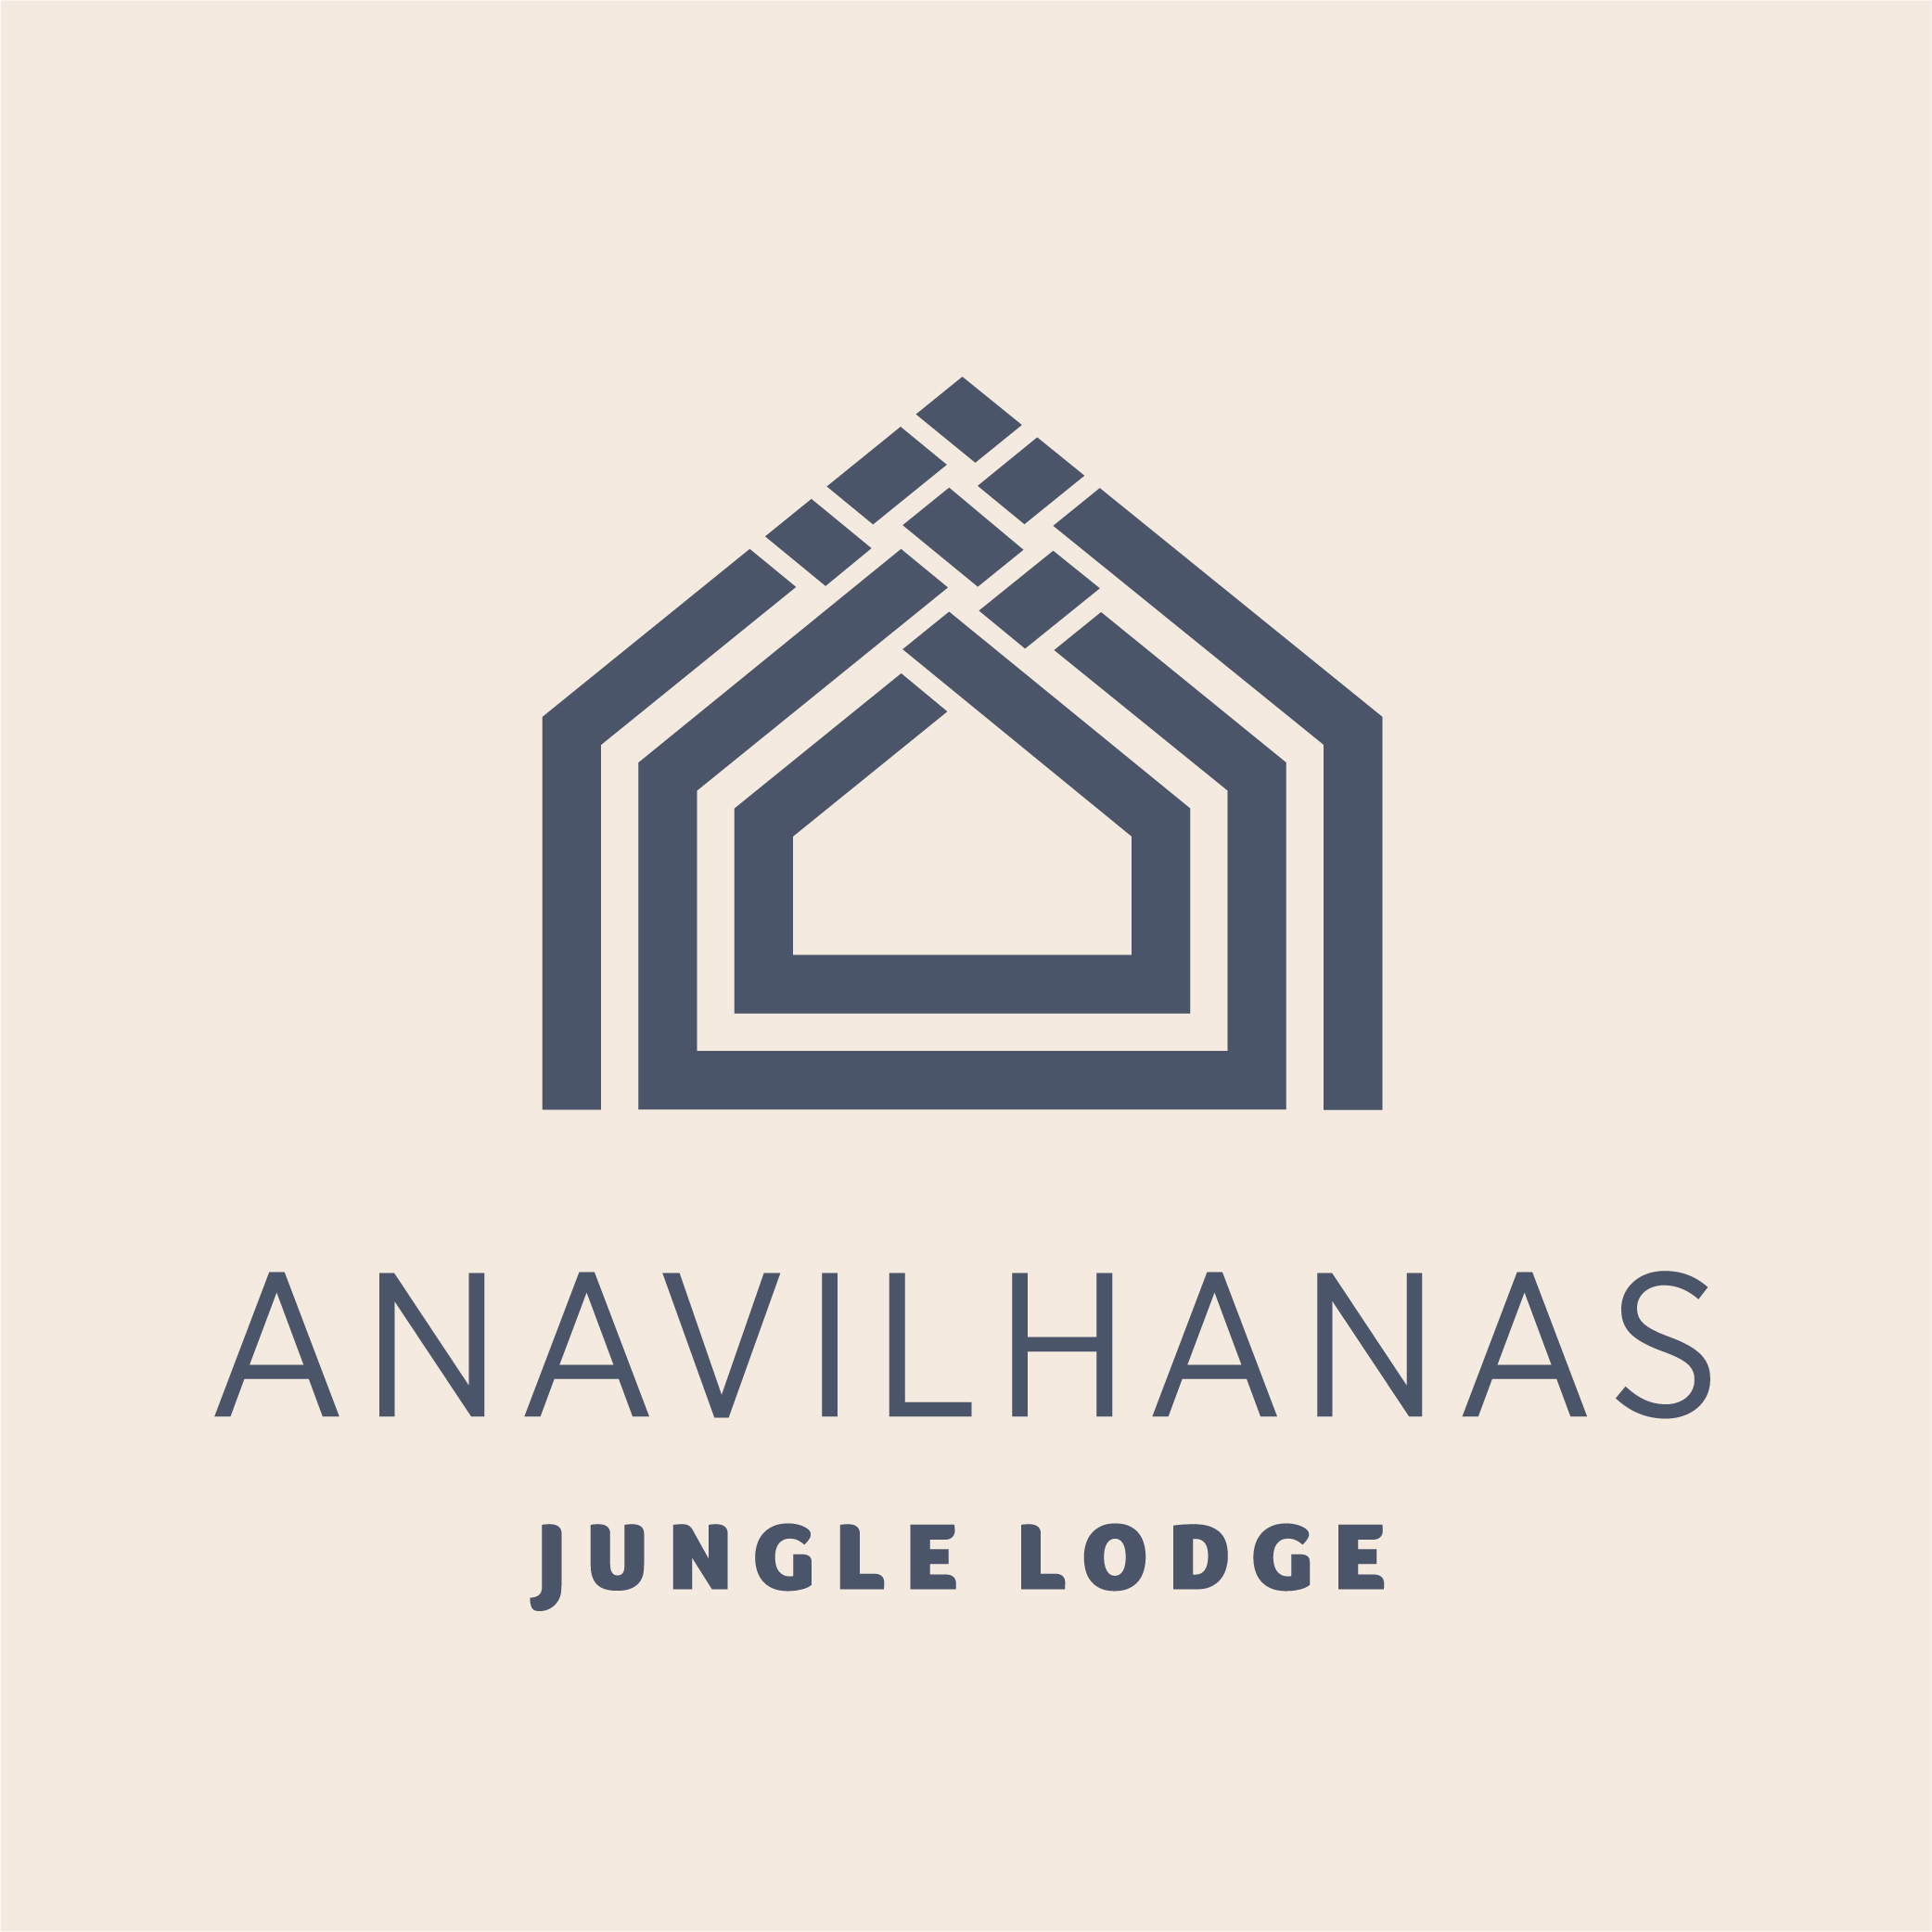 logo anavilhanas jungle lodge